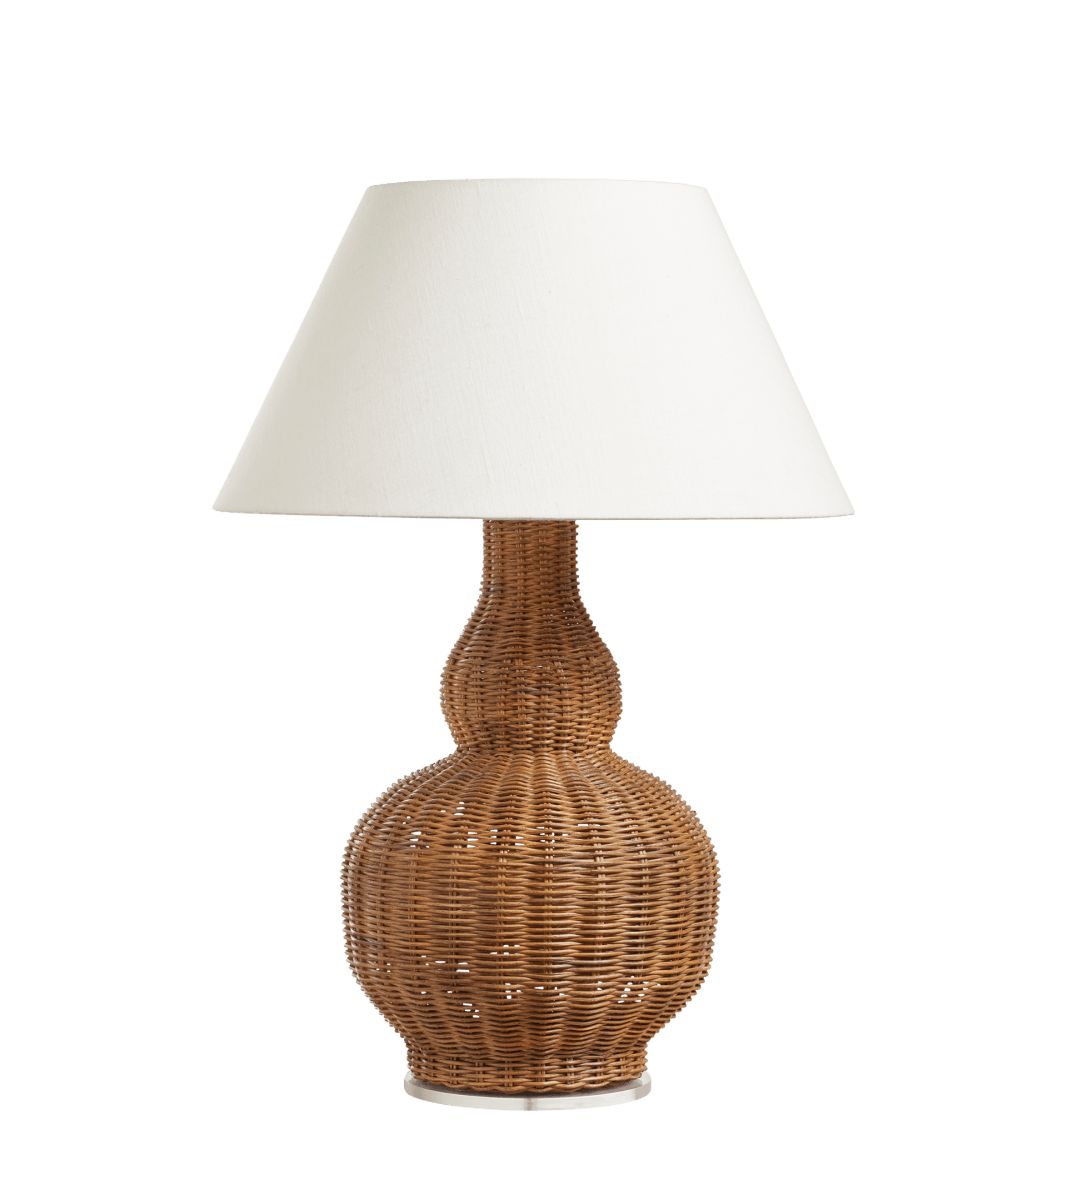 Calabash Rattan Table Lamp - Natural | OKA US